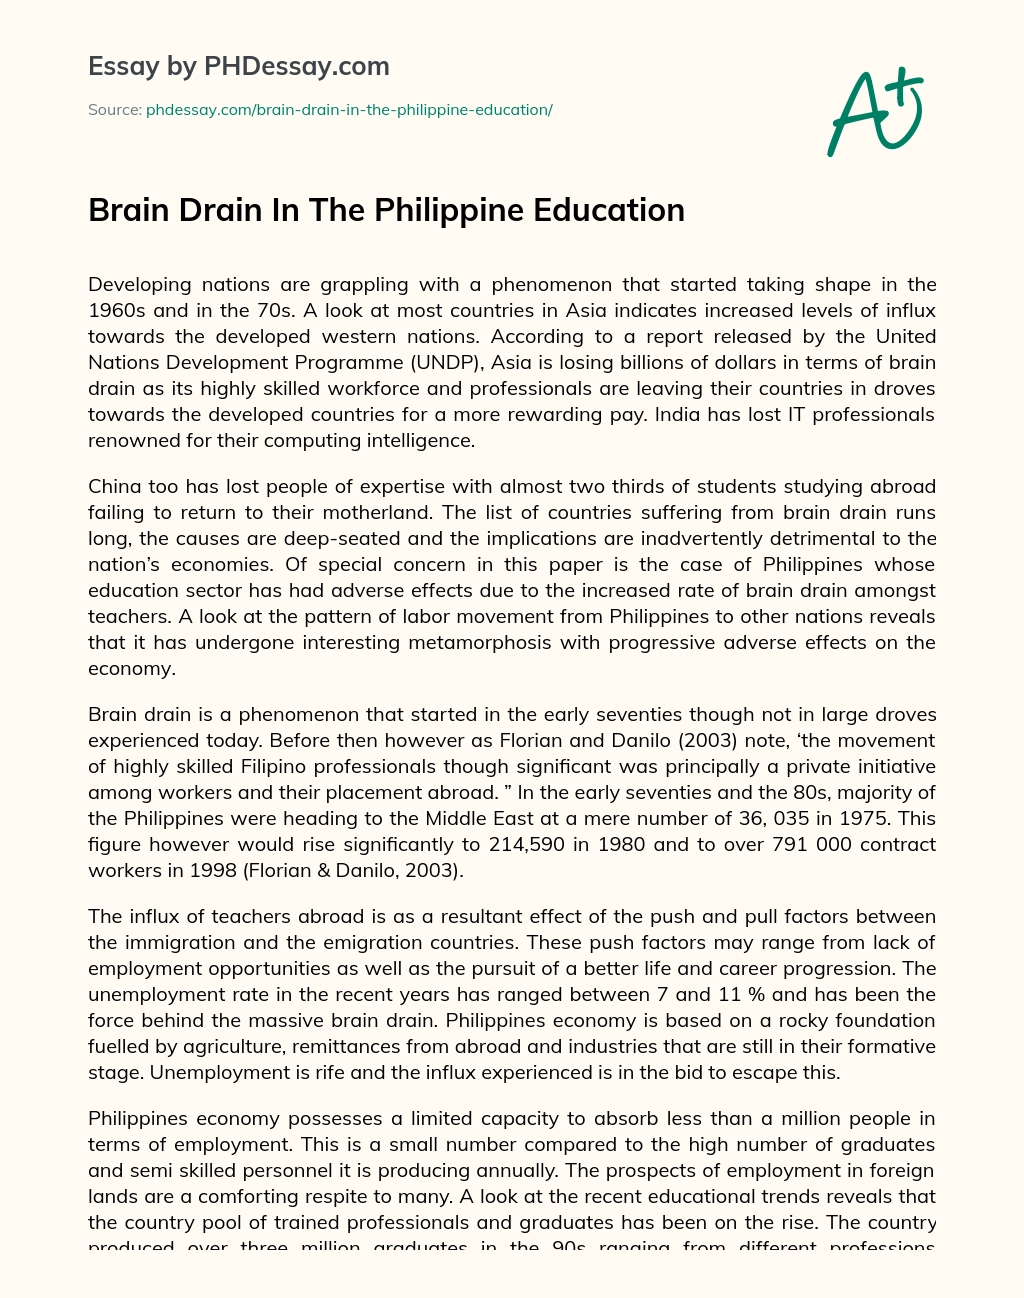 Brain Drain In The Philippine Education essay